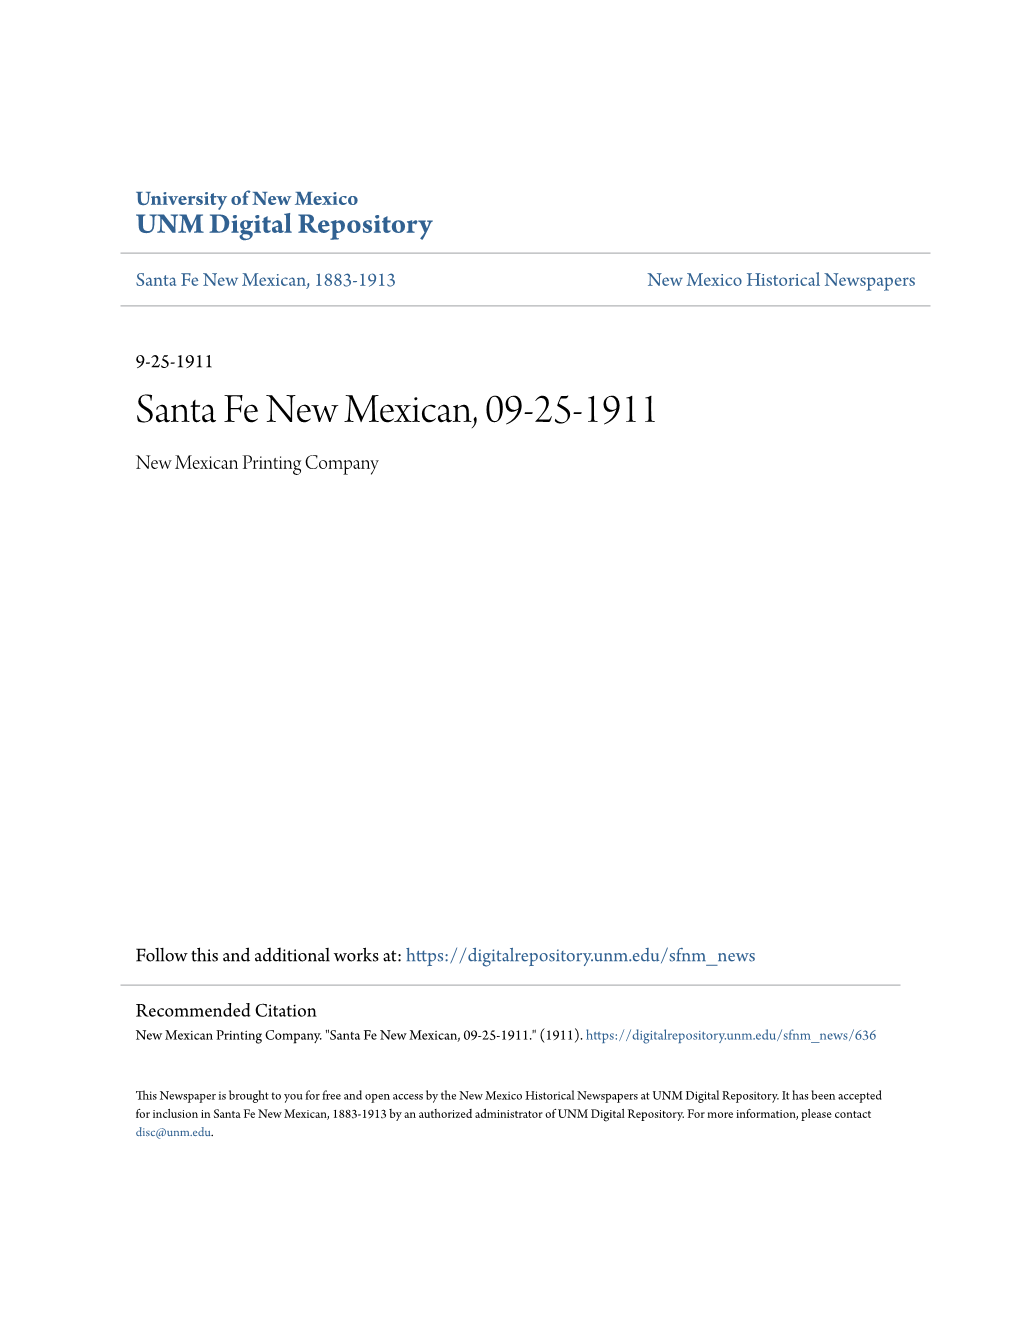 Santa Fe New Mexican, 09-25-1911 New Mexican Printing Company